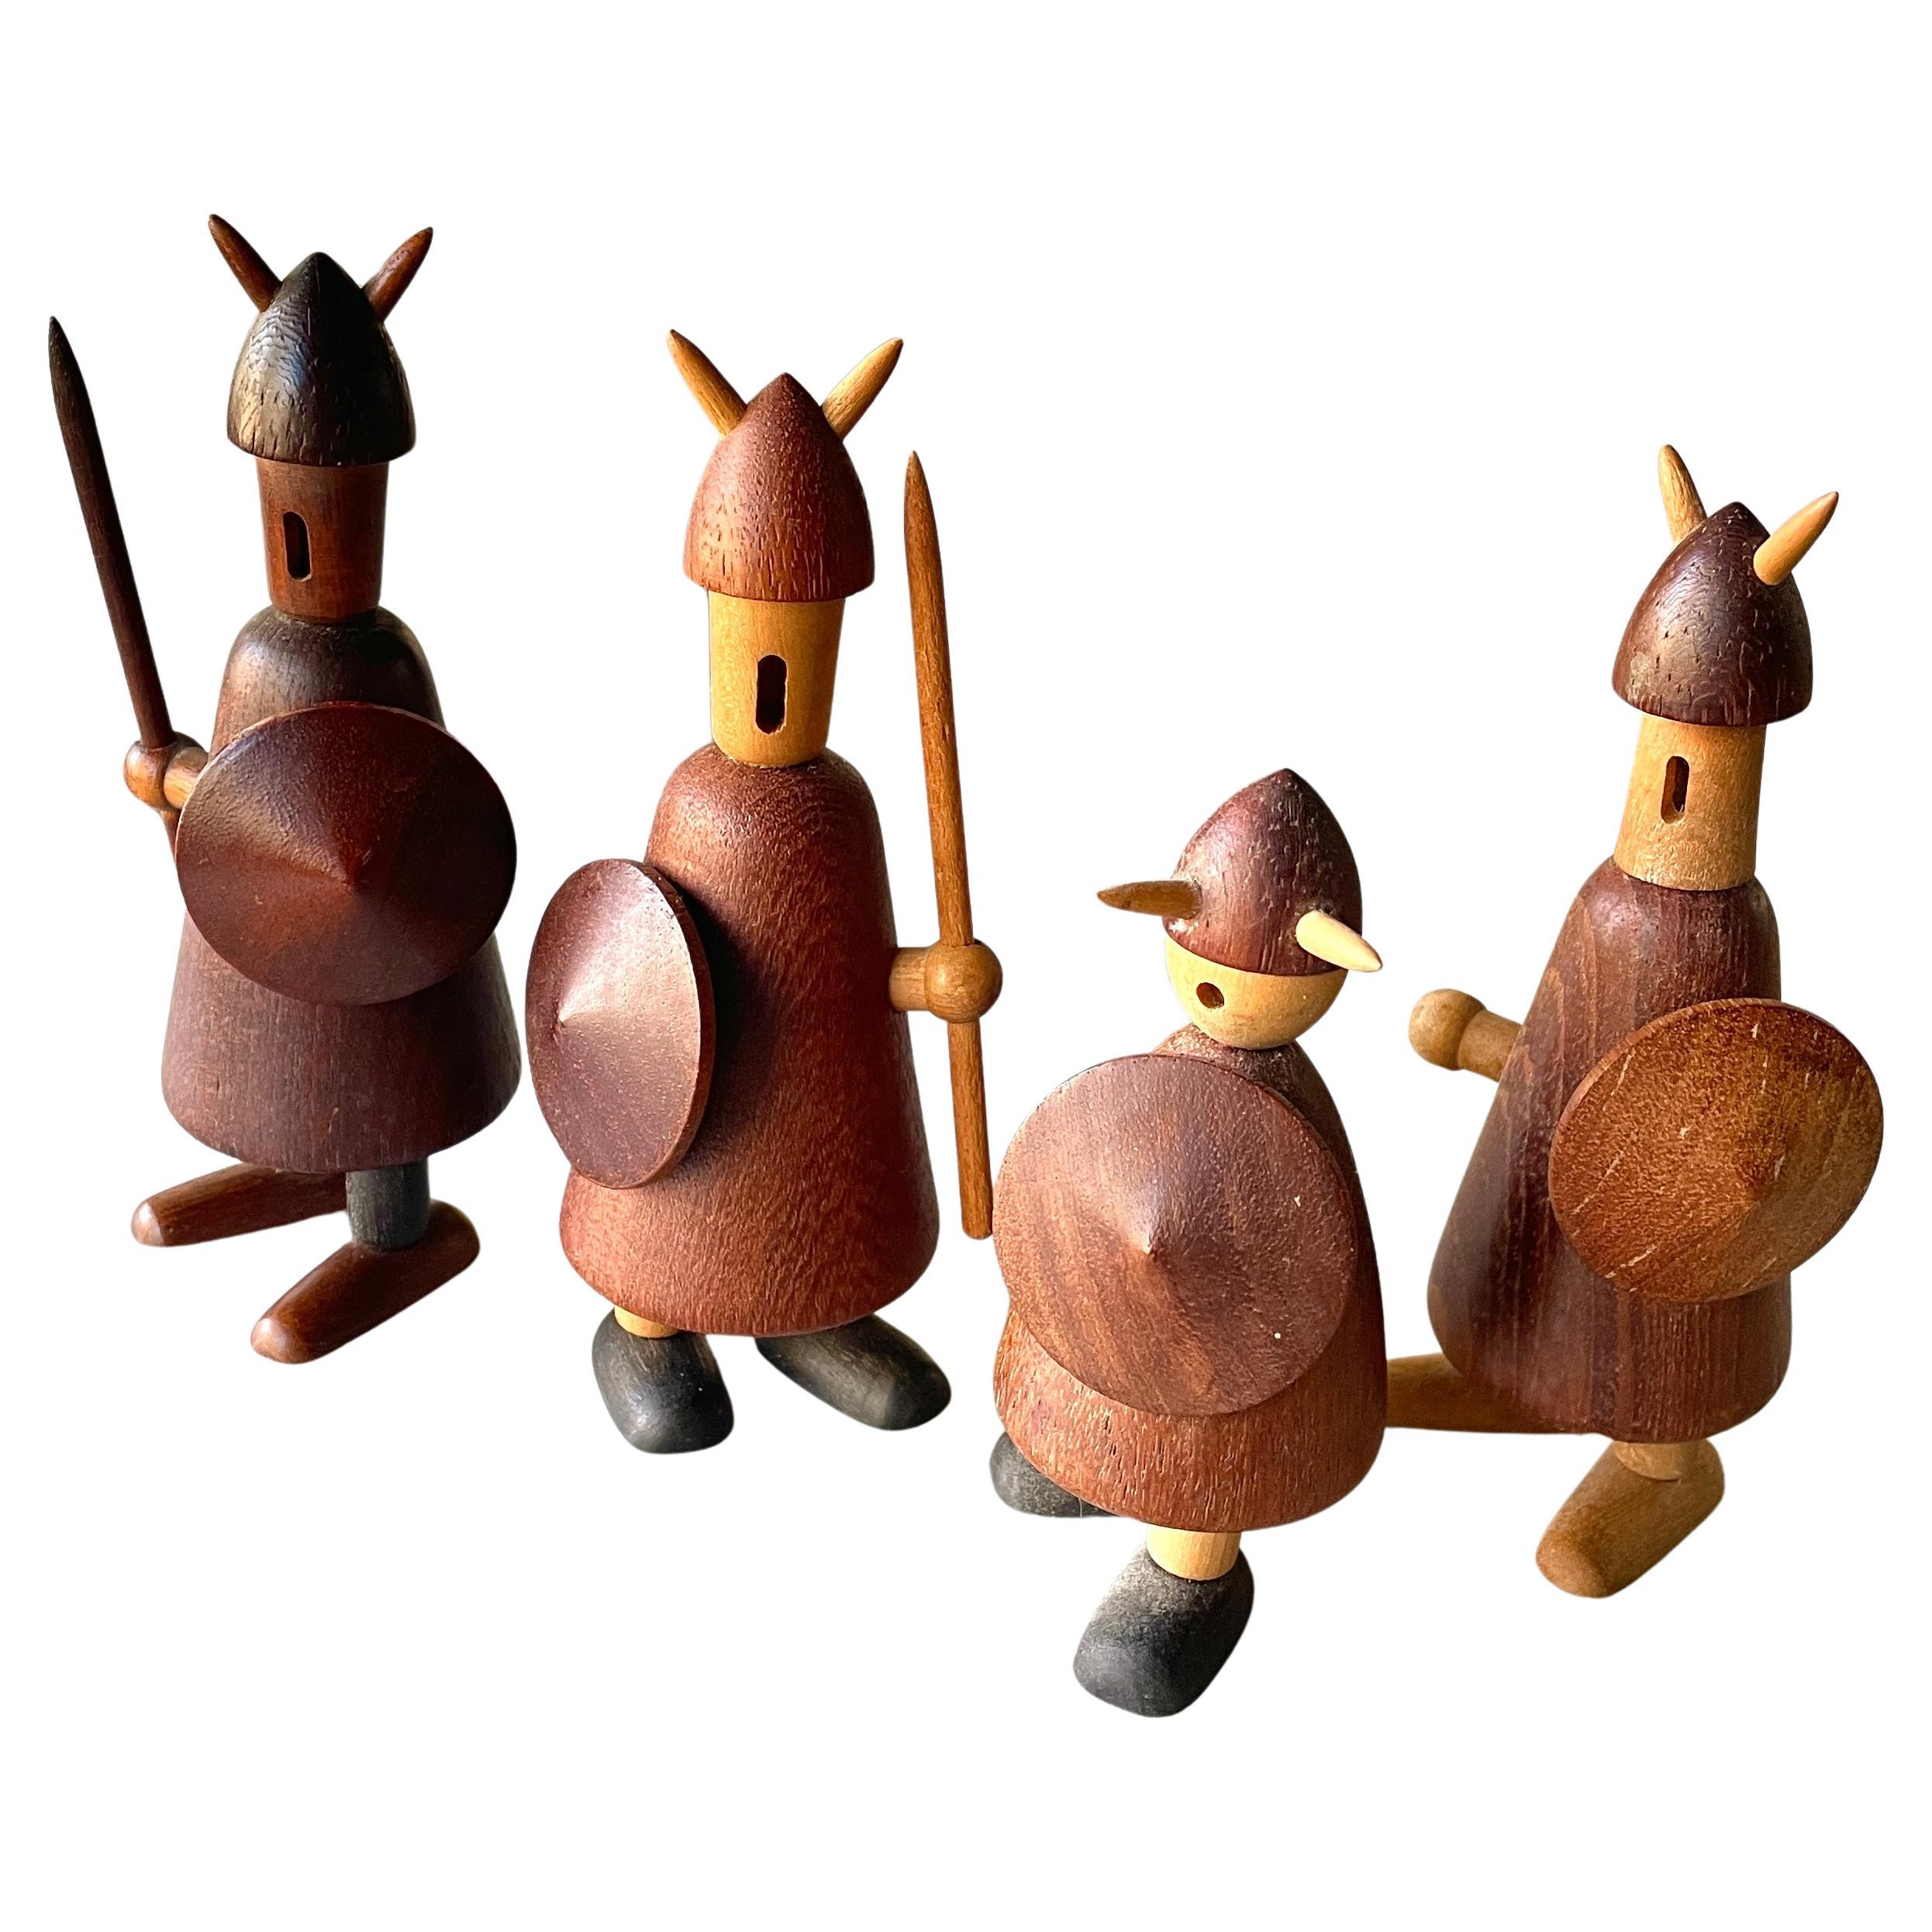 4 dänische Viking-Soldatenfiguren aus Teakholz, Vintage 1950er Jahre, Mid-Century-Kollektion